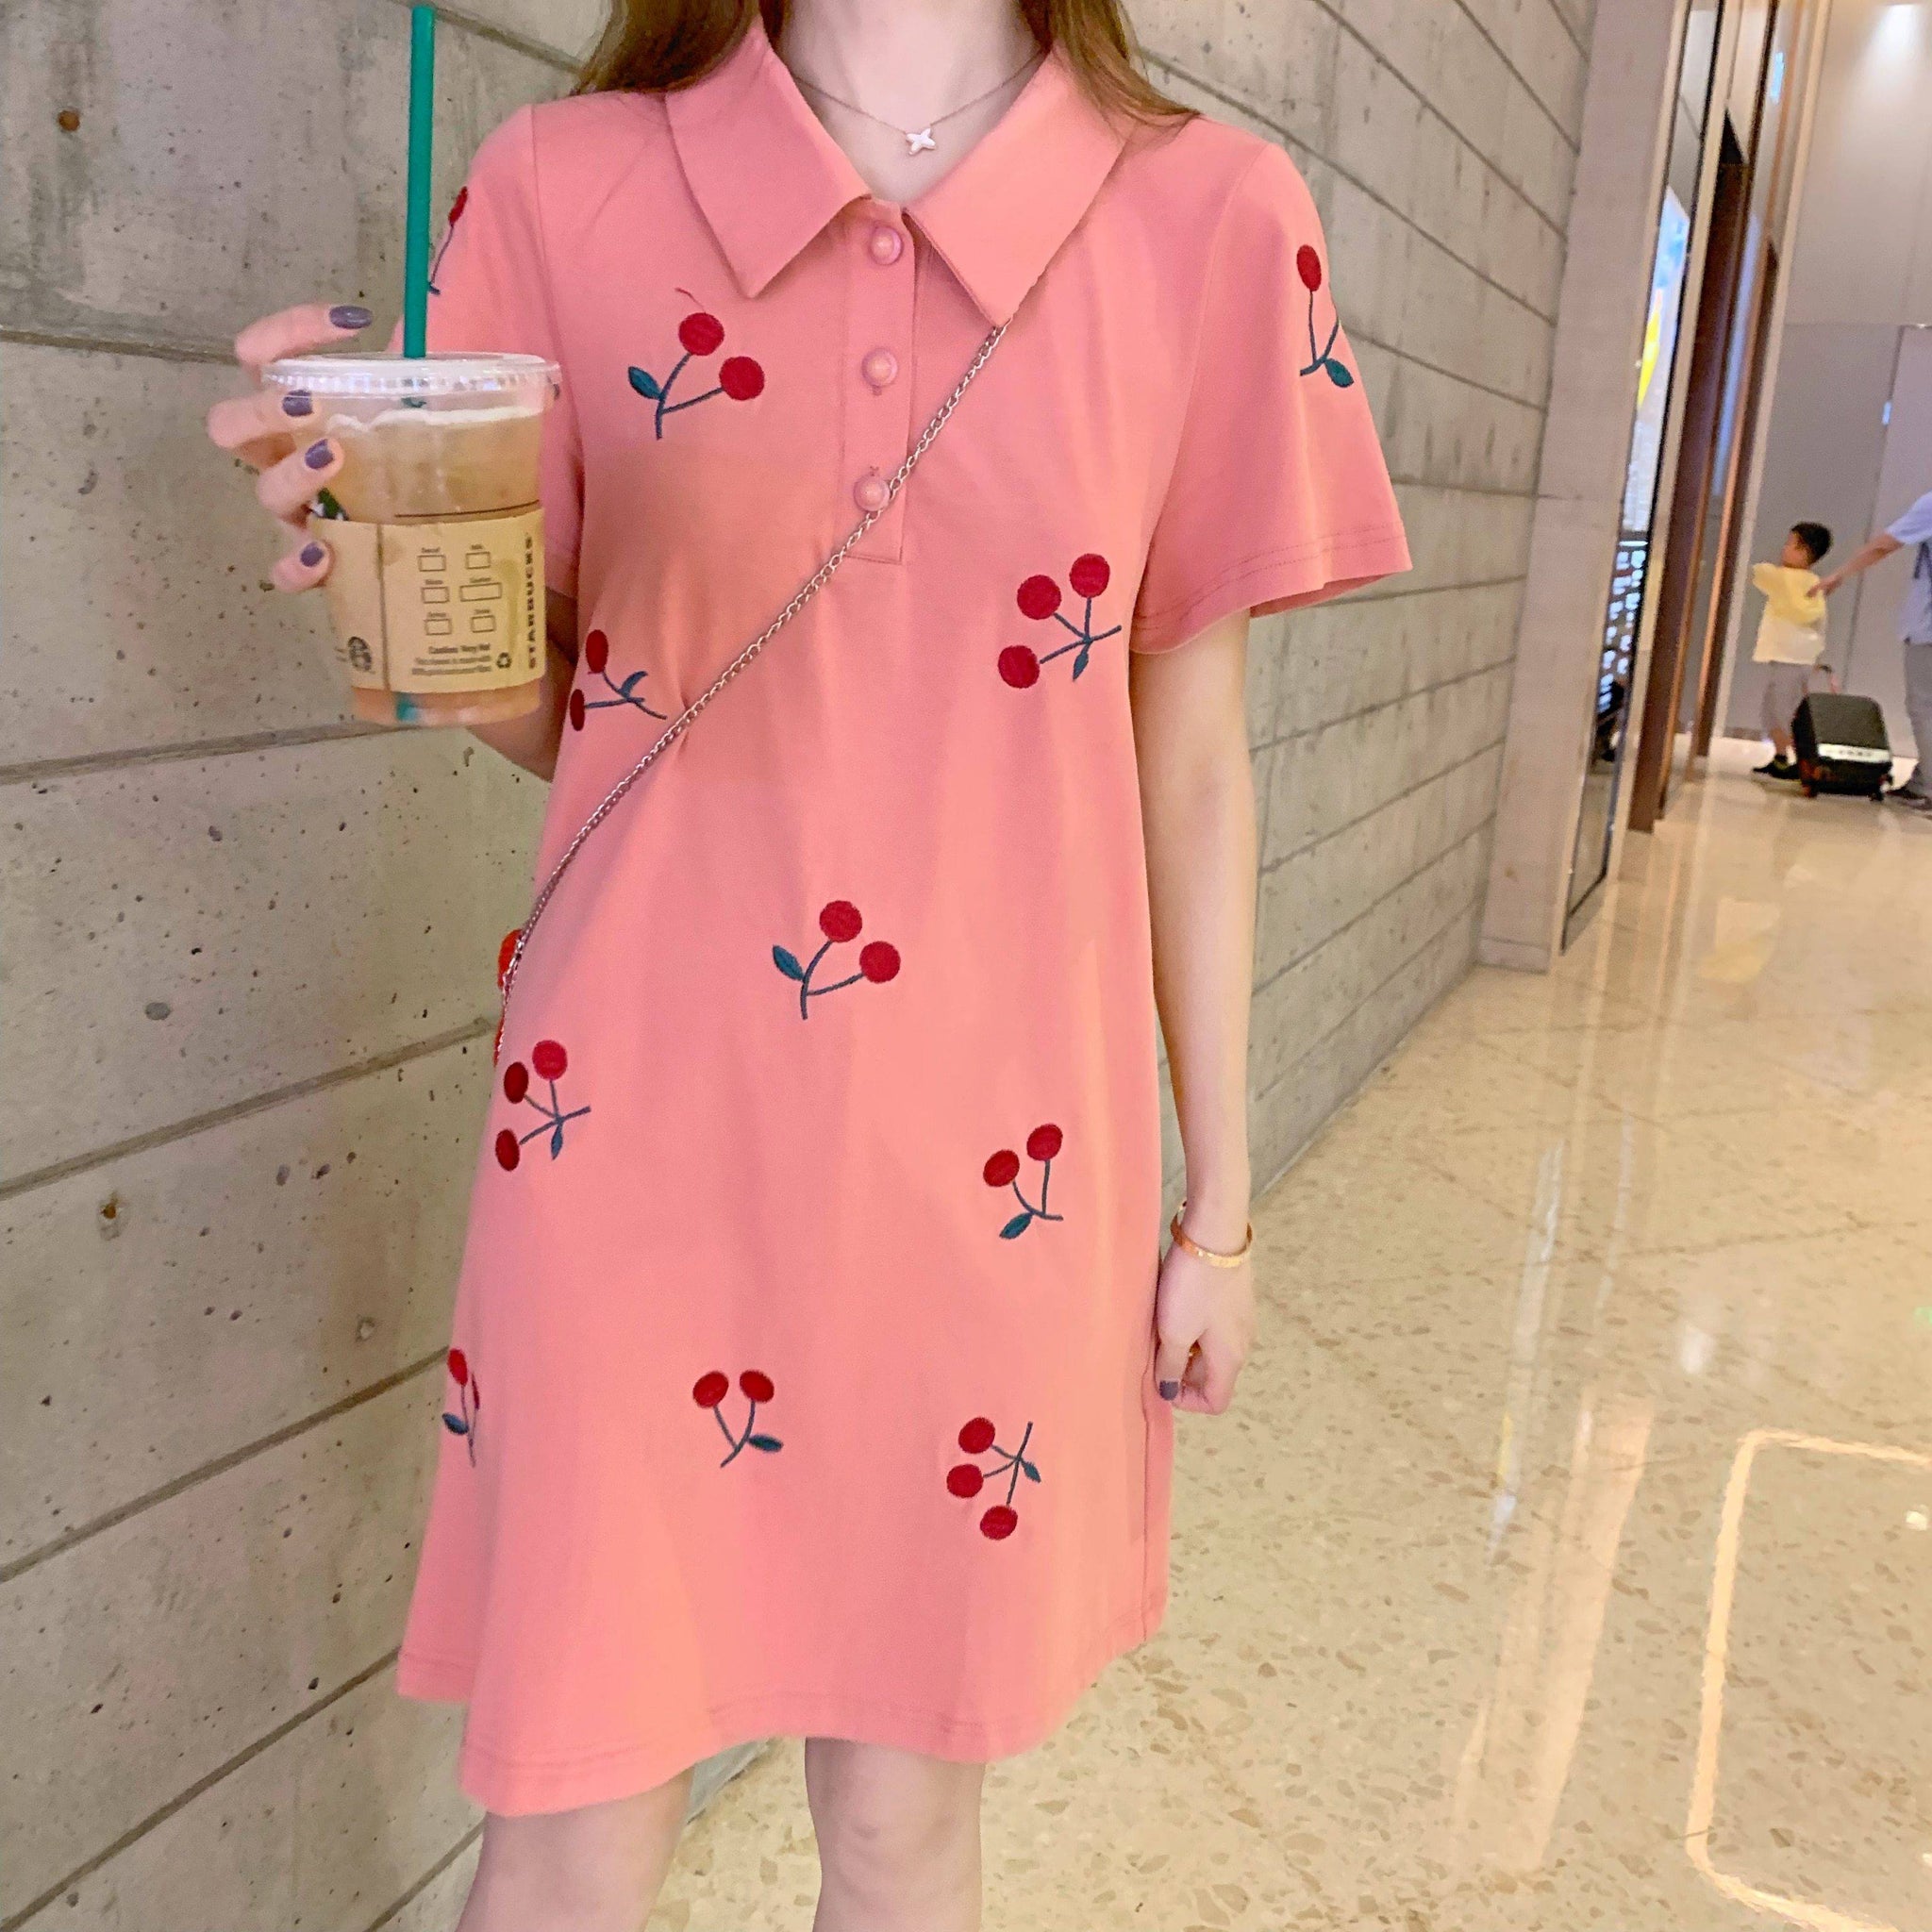 Cute Cherry Collared Kawaii Dress - Tokyo Dreams